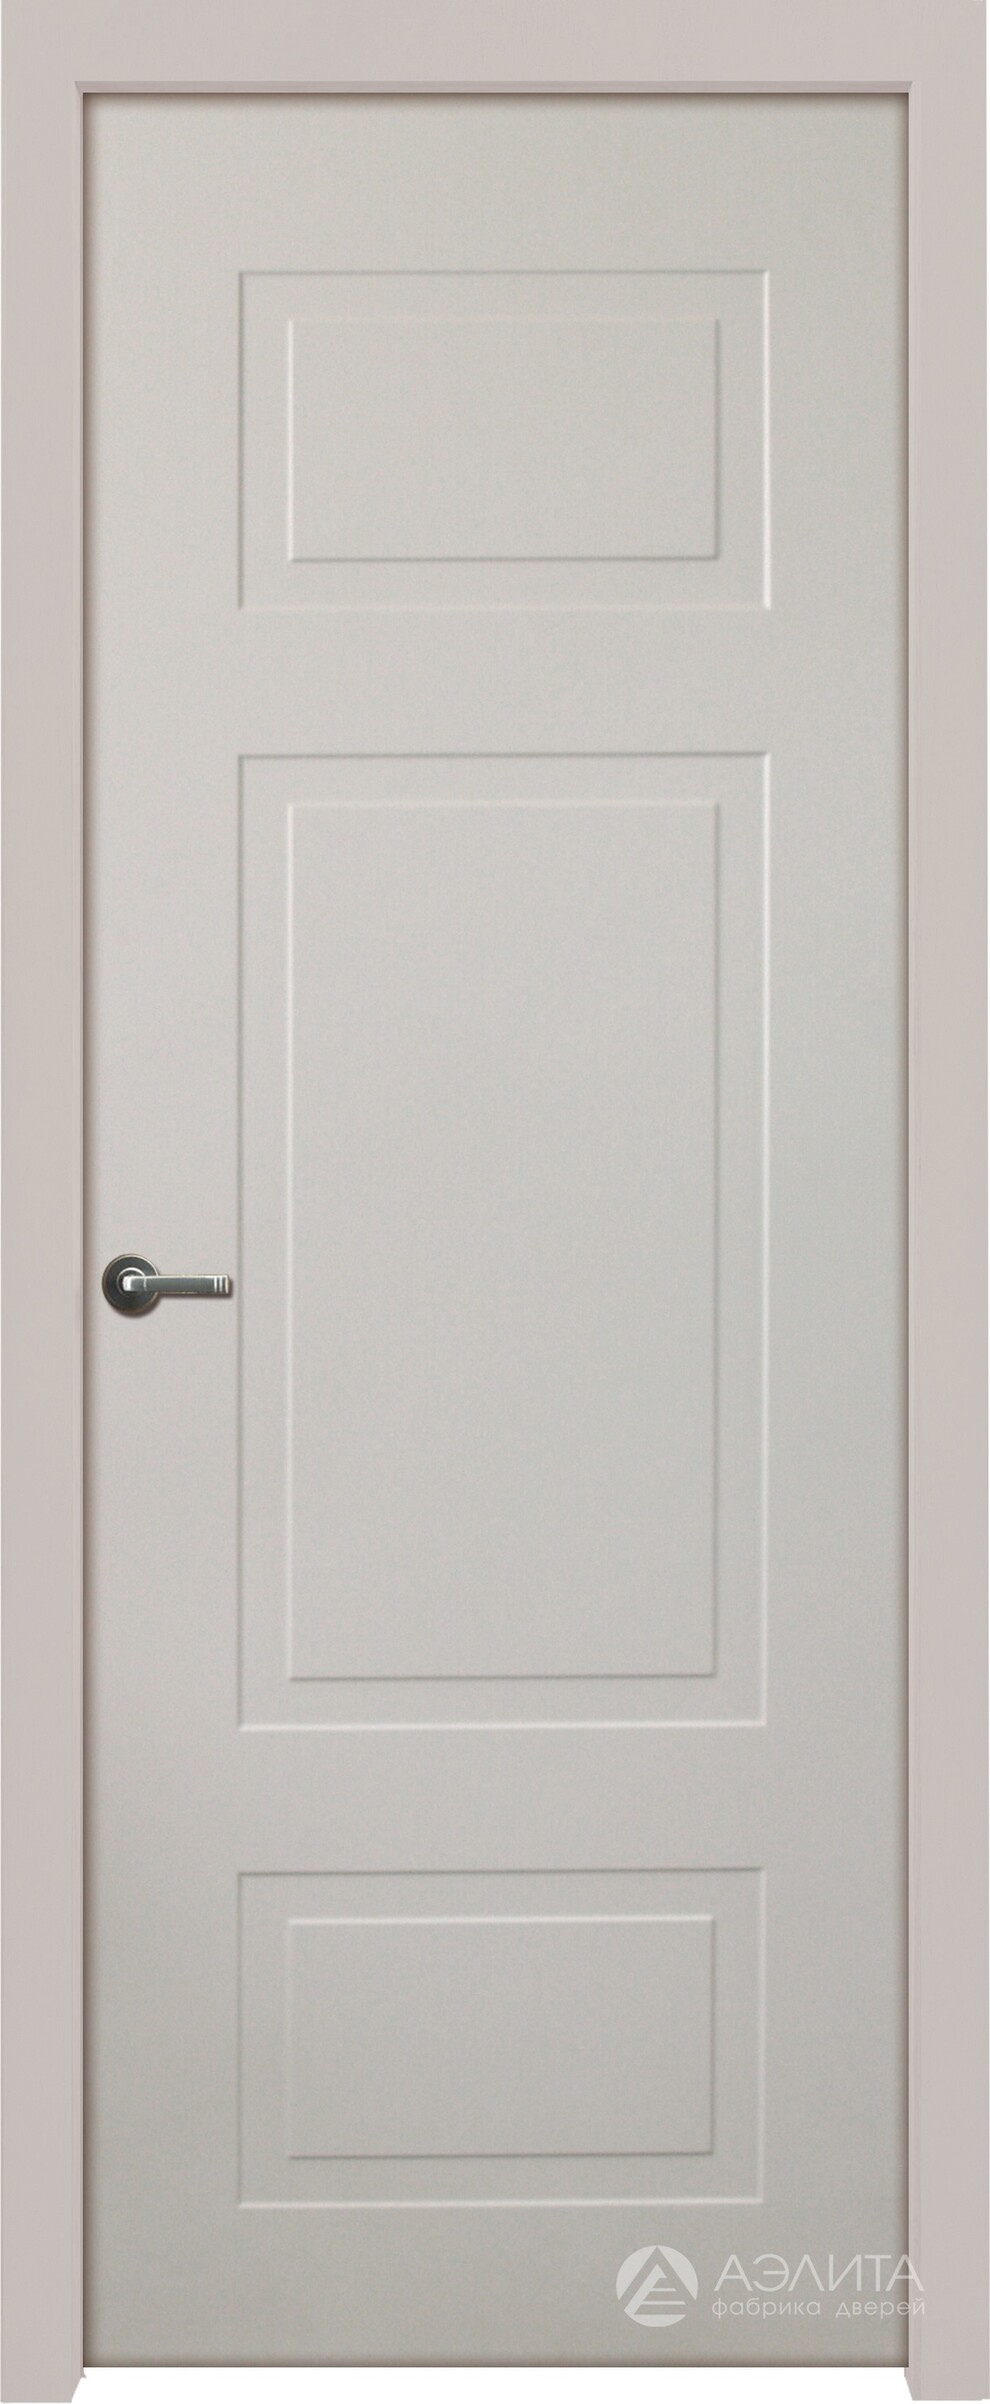 Аэлита Межкомнатная дверь Твин 140 ДГ, арт. 22185 - фото №1